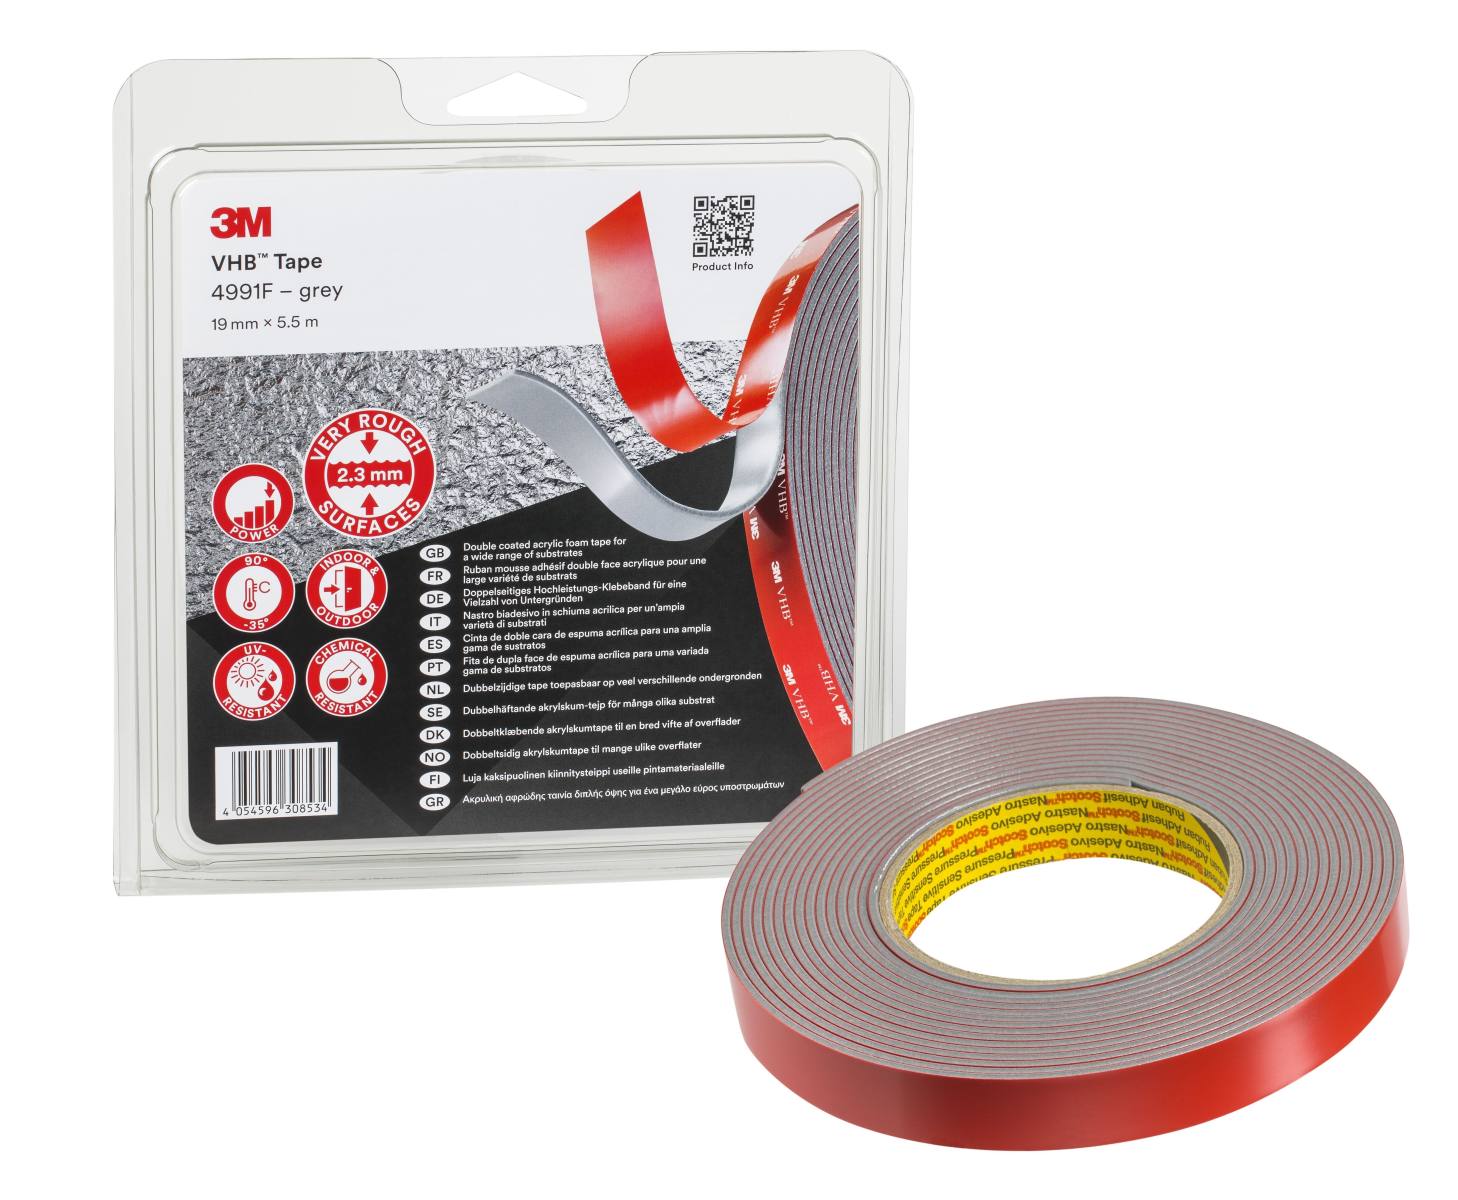 3M VHB Adhesive tape 4991F, grey, 19 mm x 5.5 m, 2.3 mm, blister pack